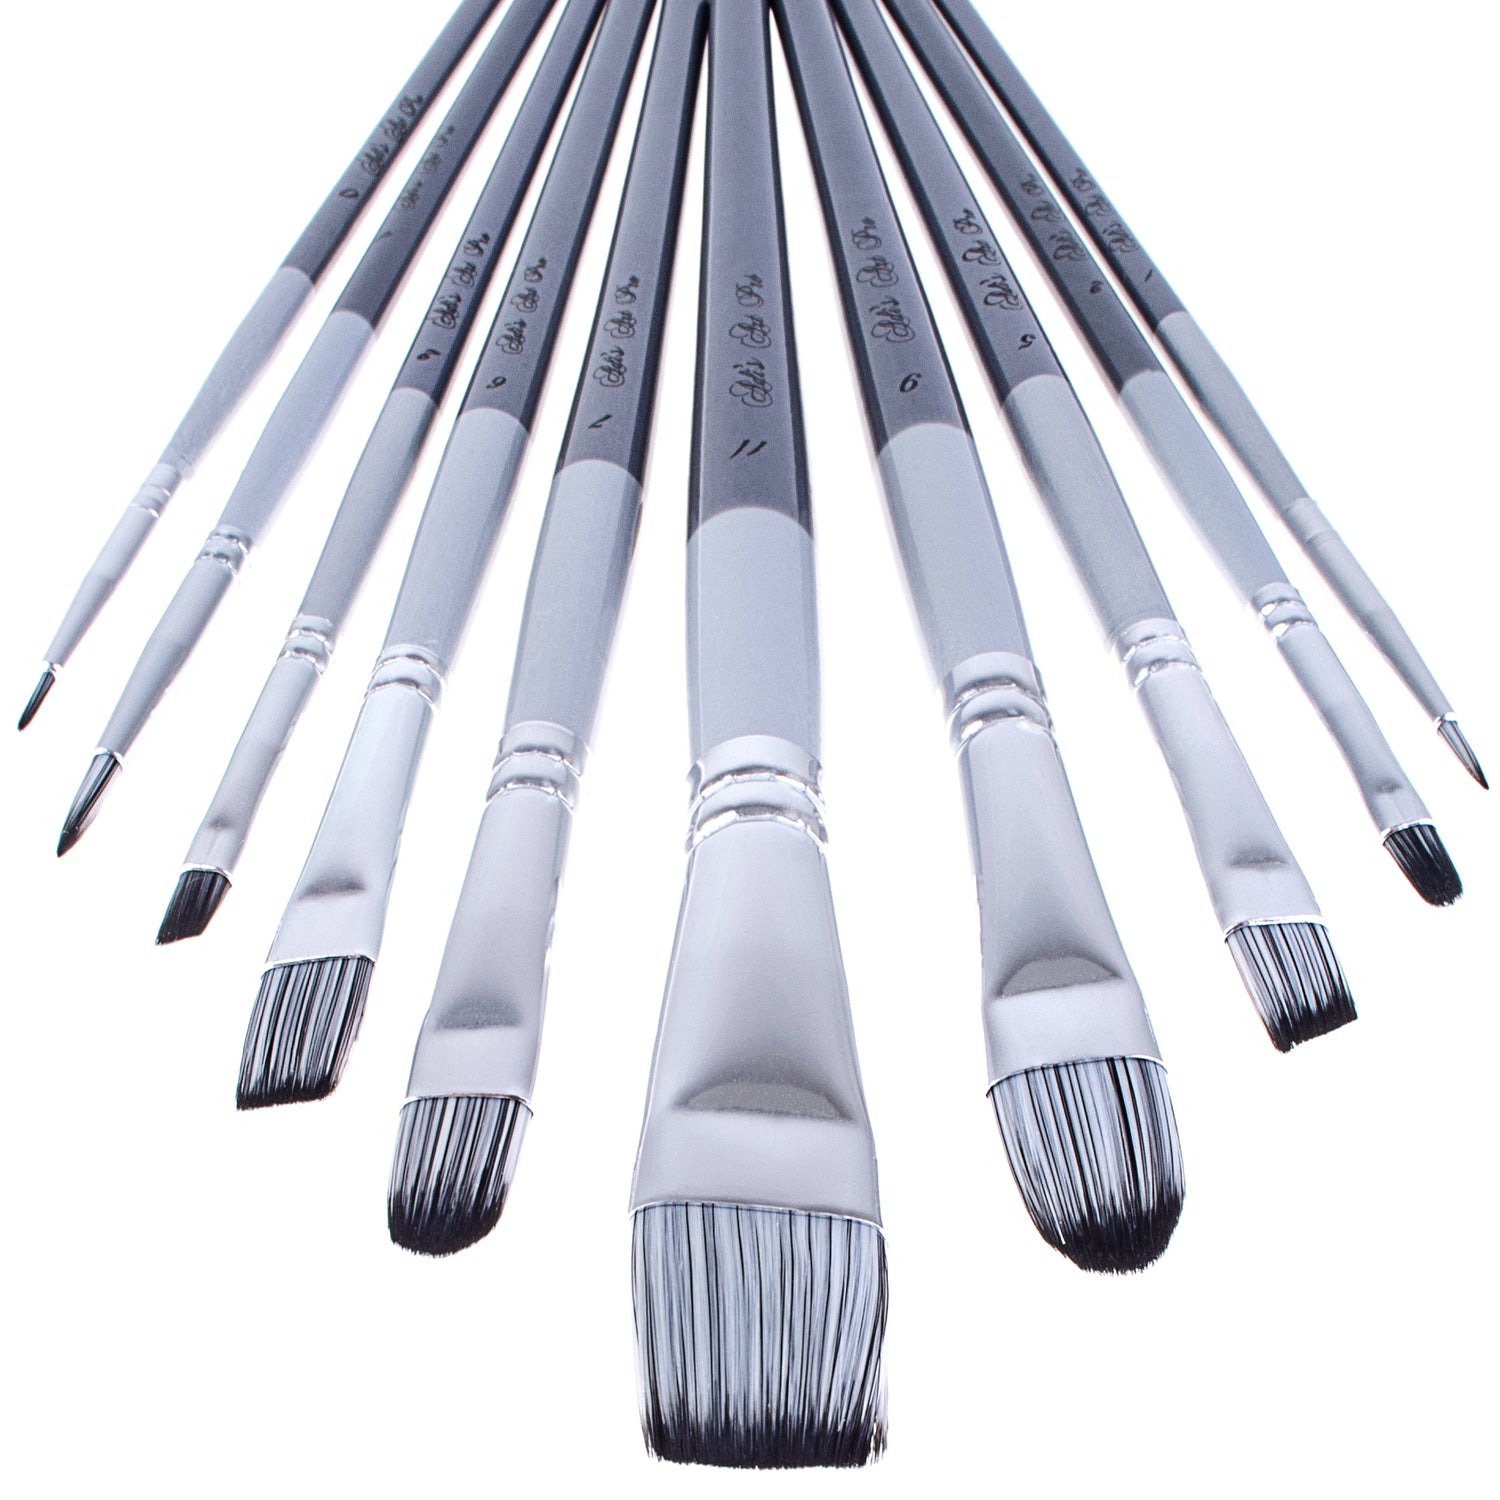 Acrylic Paint Brush Set with 12 Premium Artist Brushes